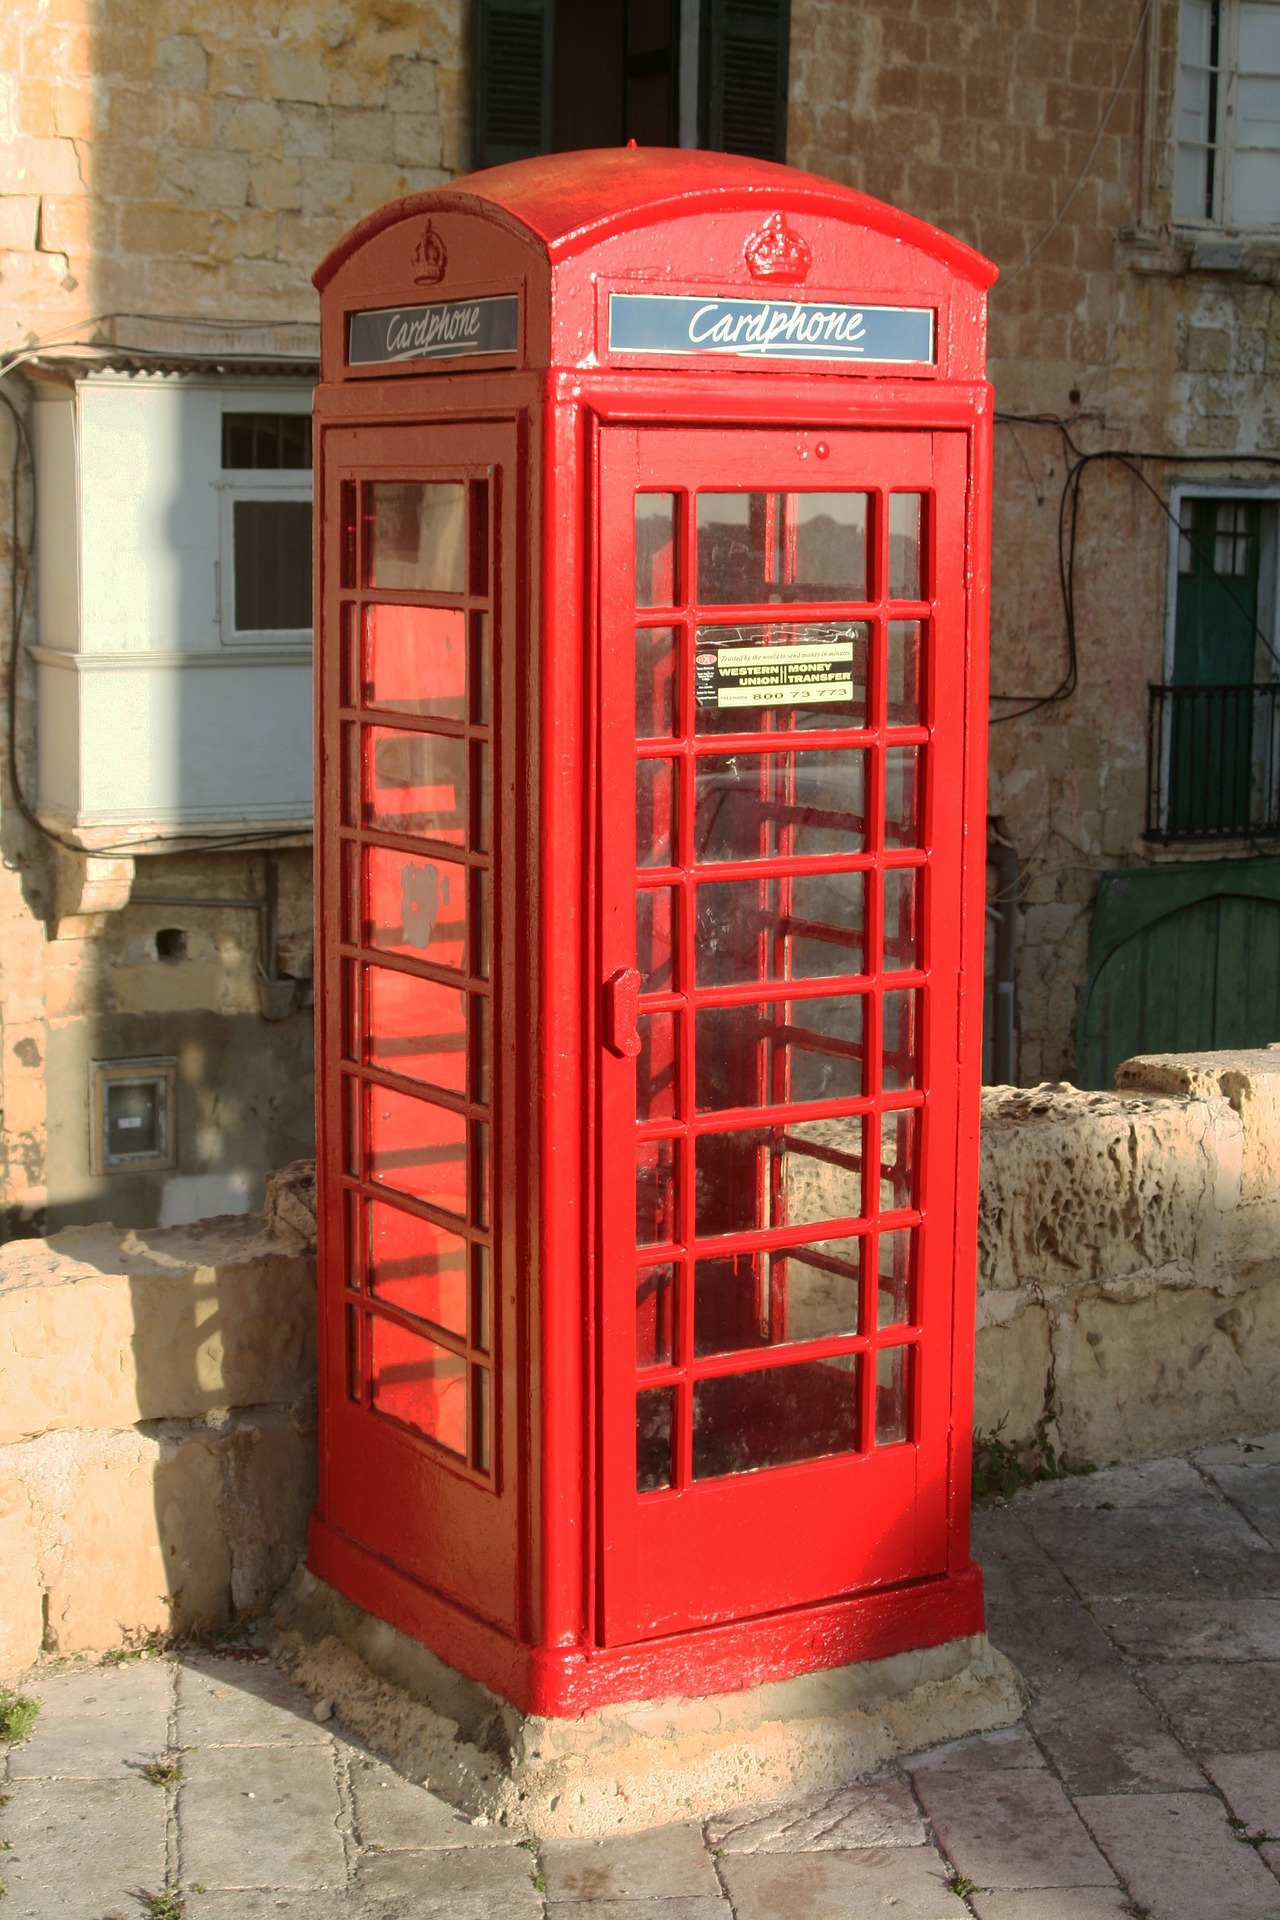 Phone booth in Valletta, Malta